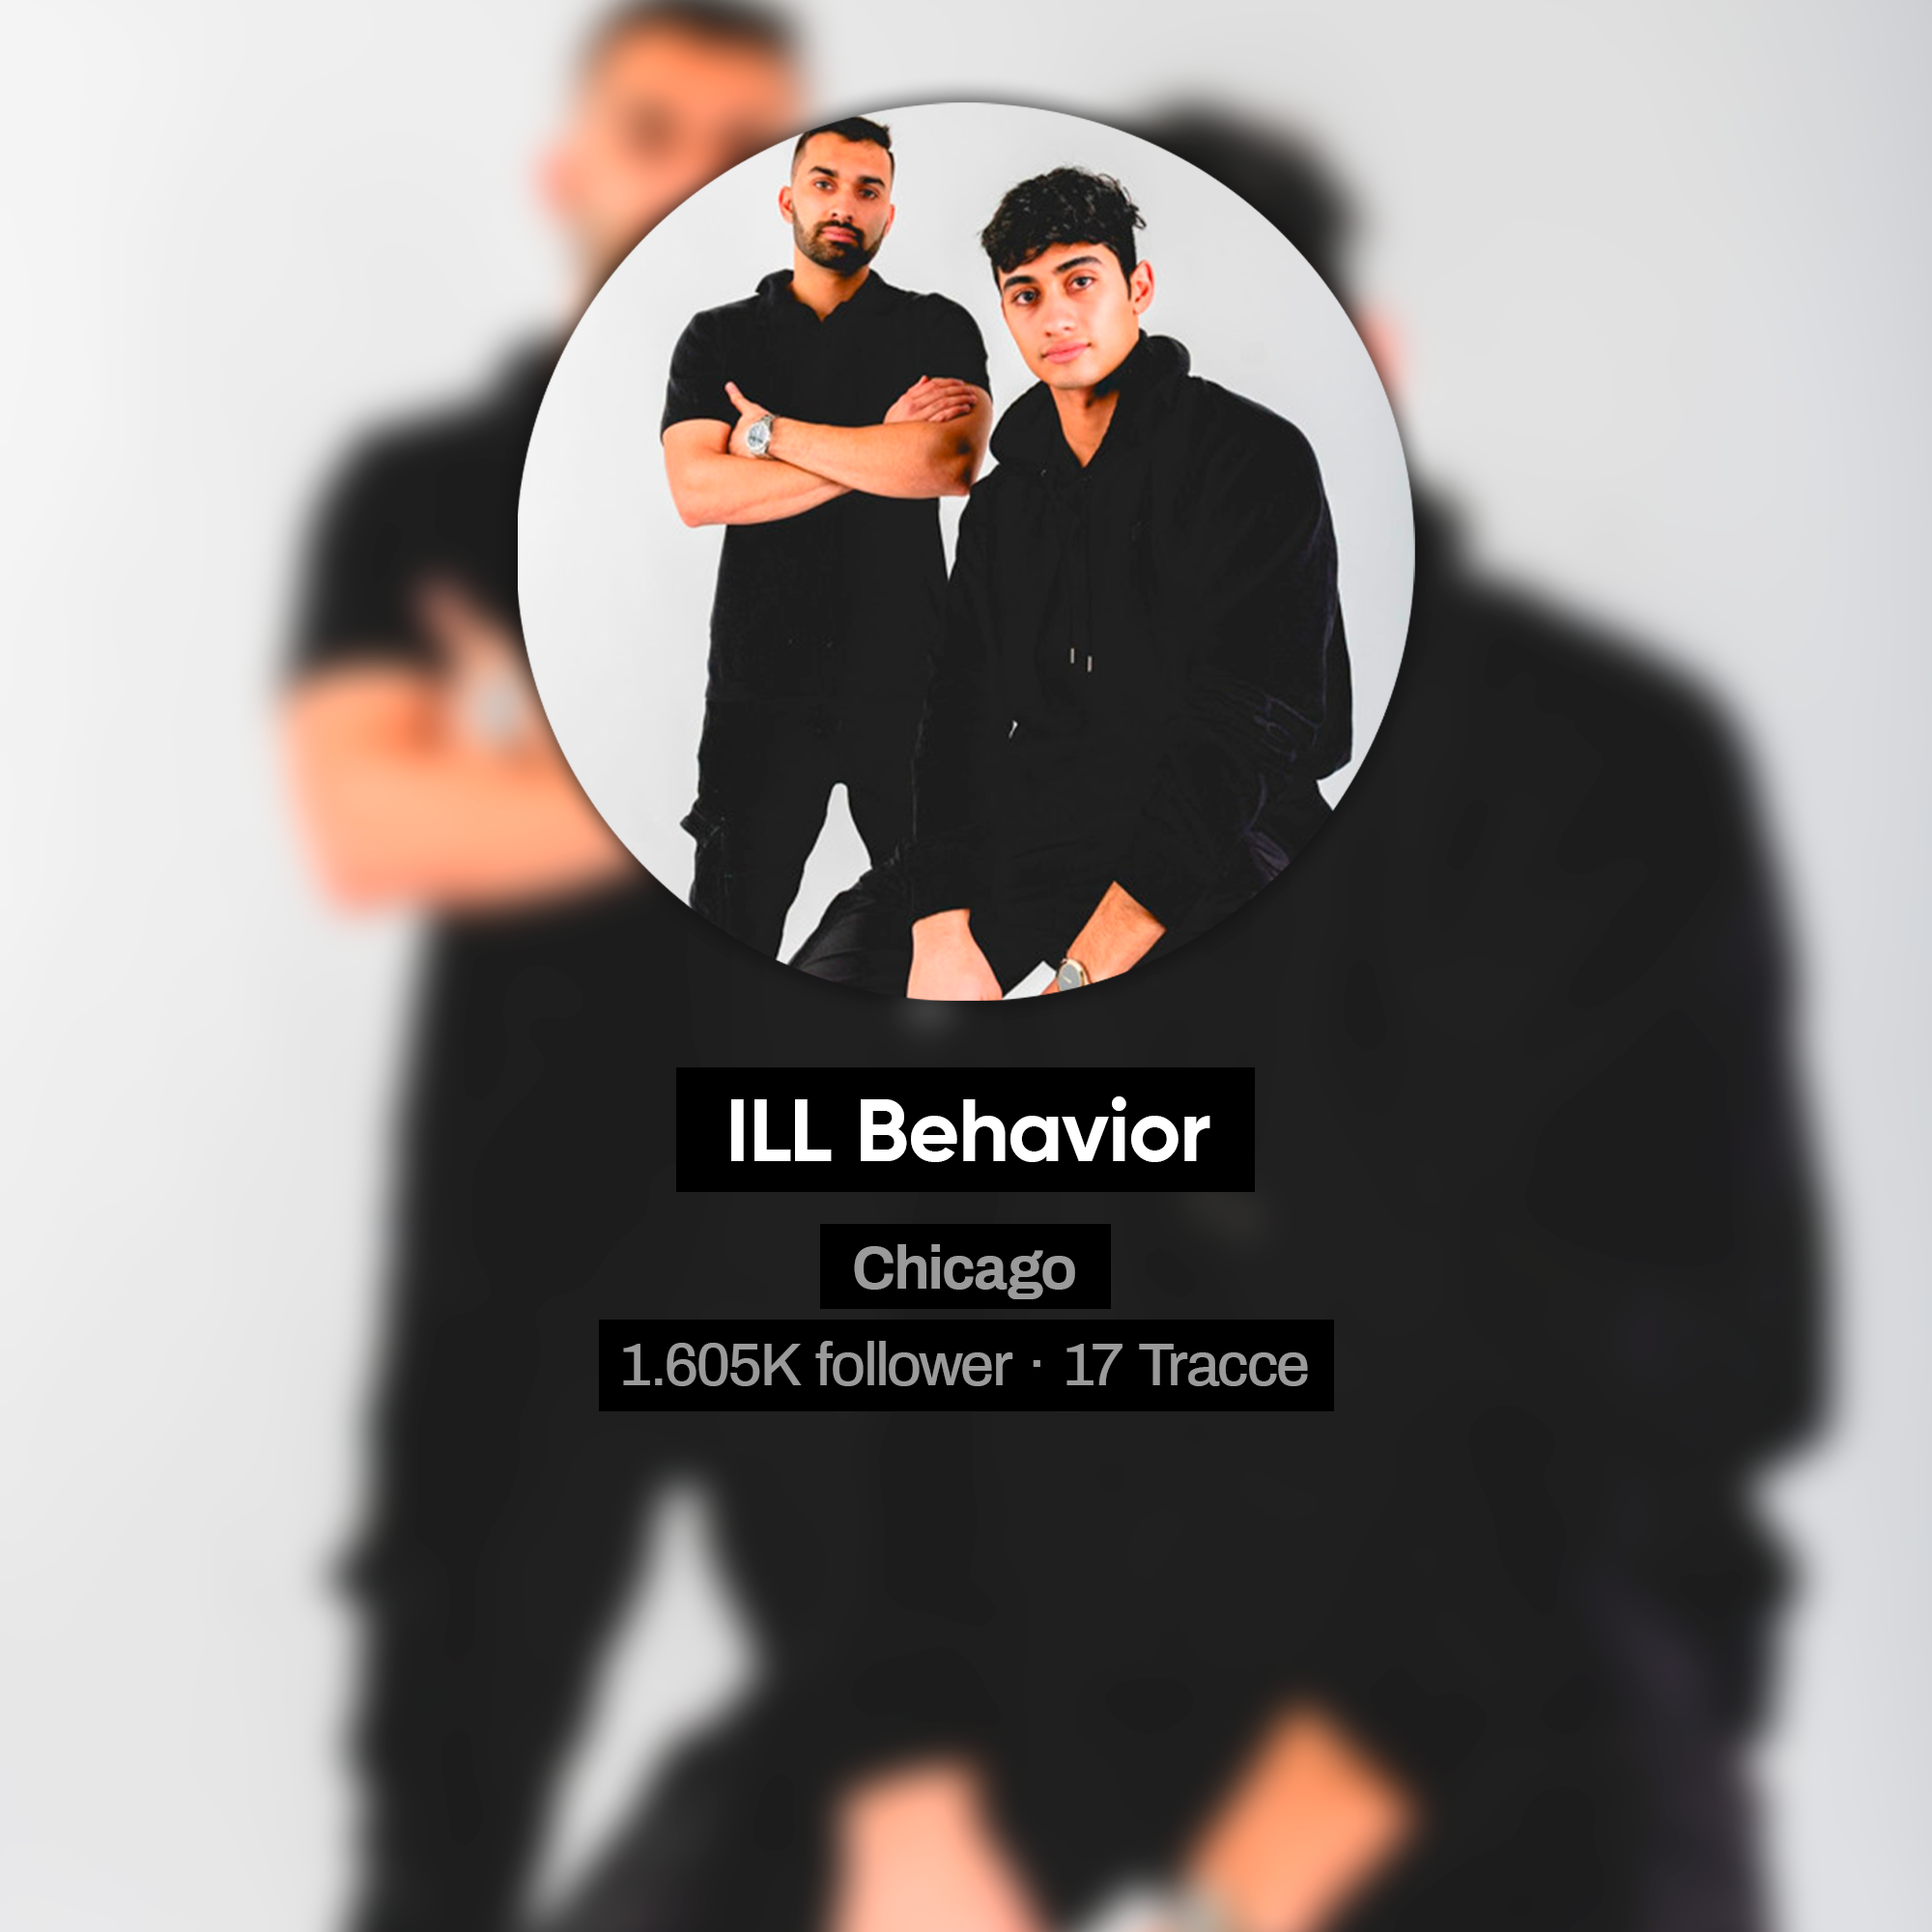 ILL Behavior